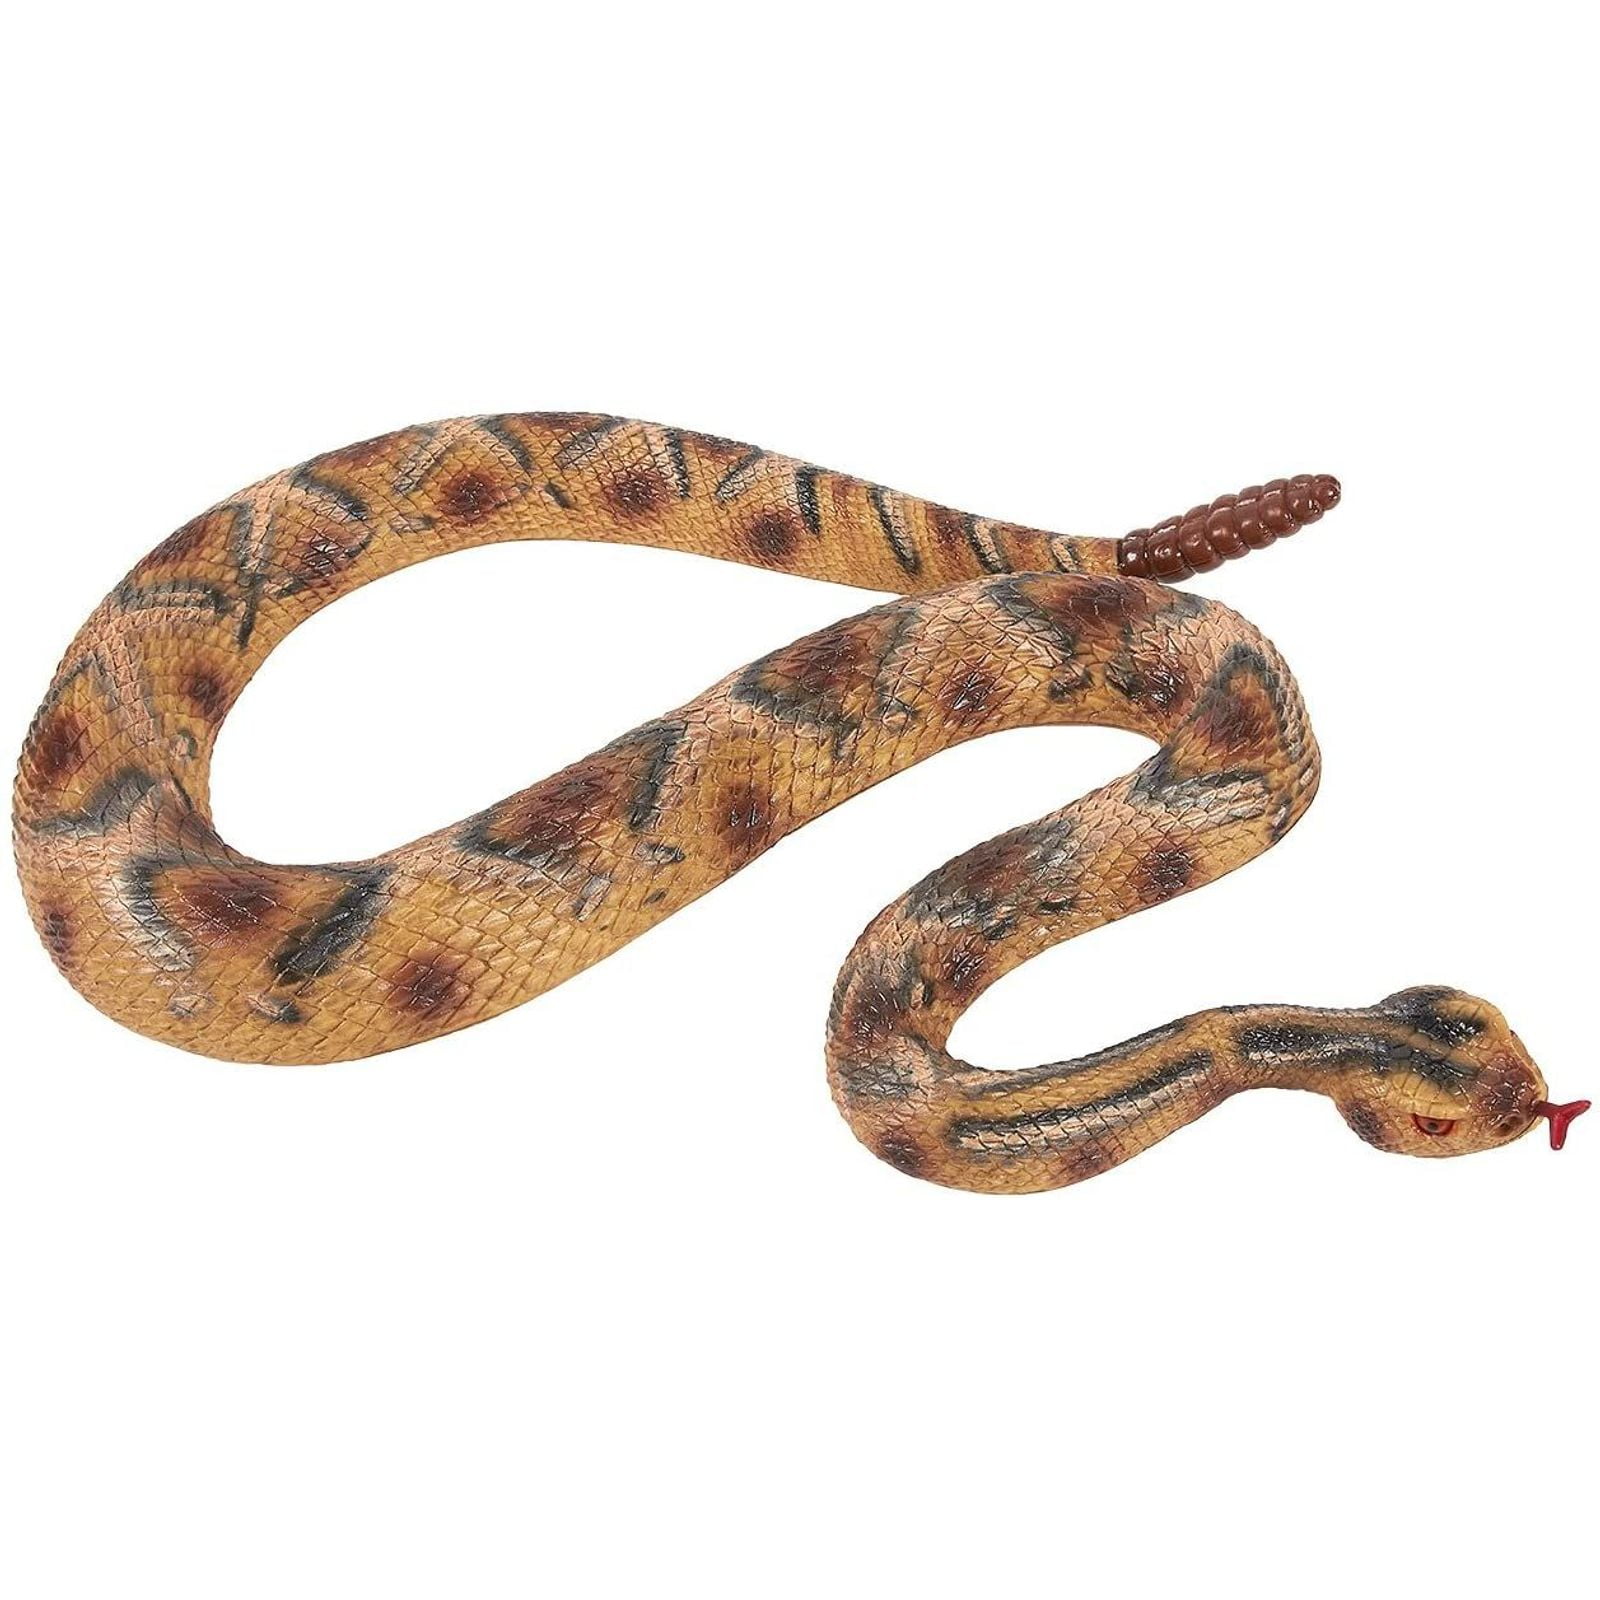 Realistic Beautifully Detailed Hand Painted Rattlesnake Snake Plastic PVC Figure 